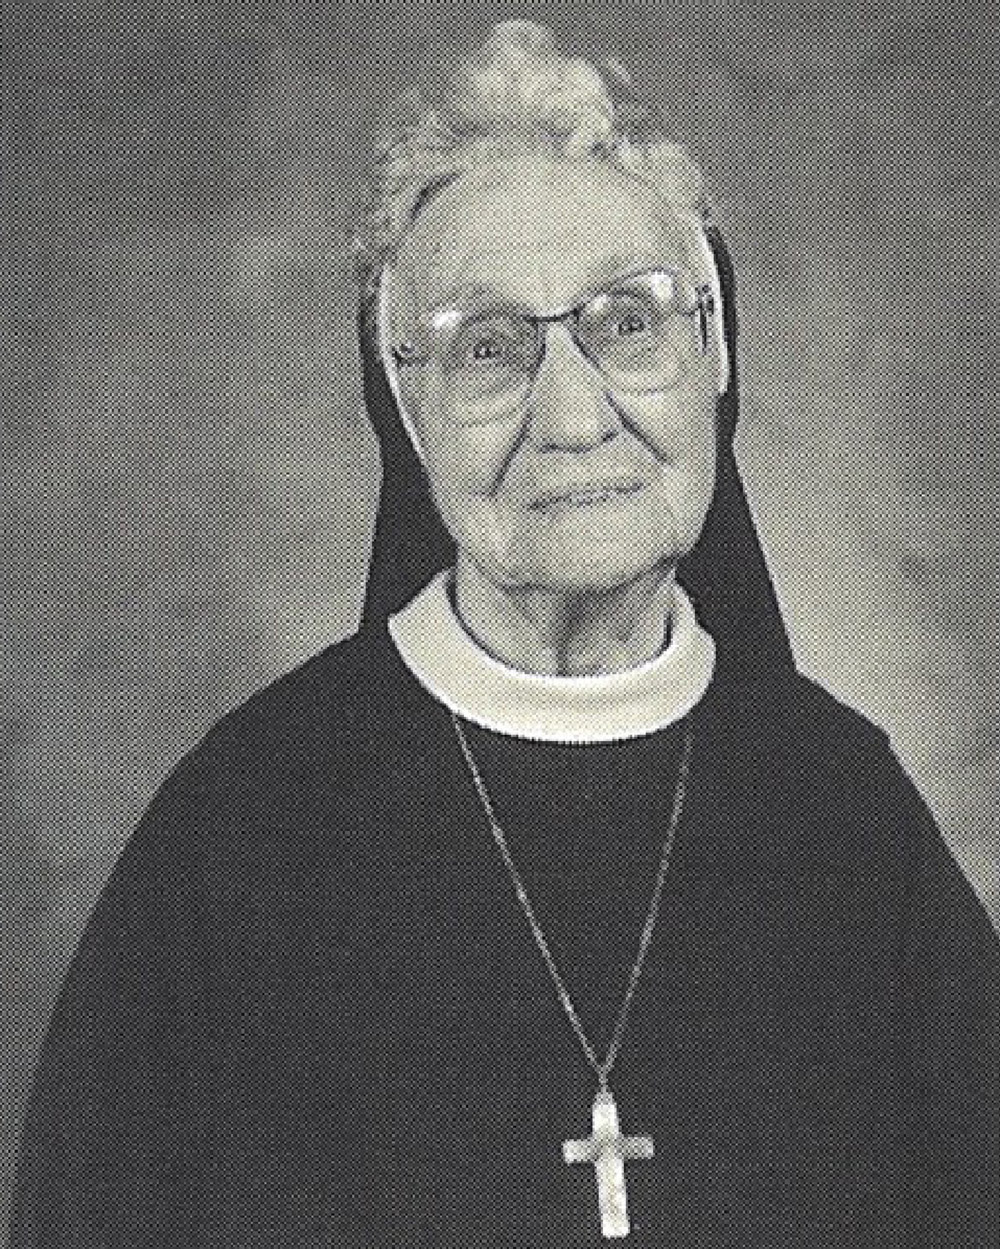 Sister-M.-Theophane-Czelusta-OSF-1909-2002